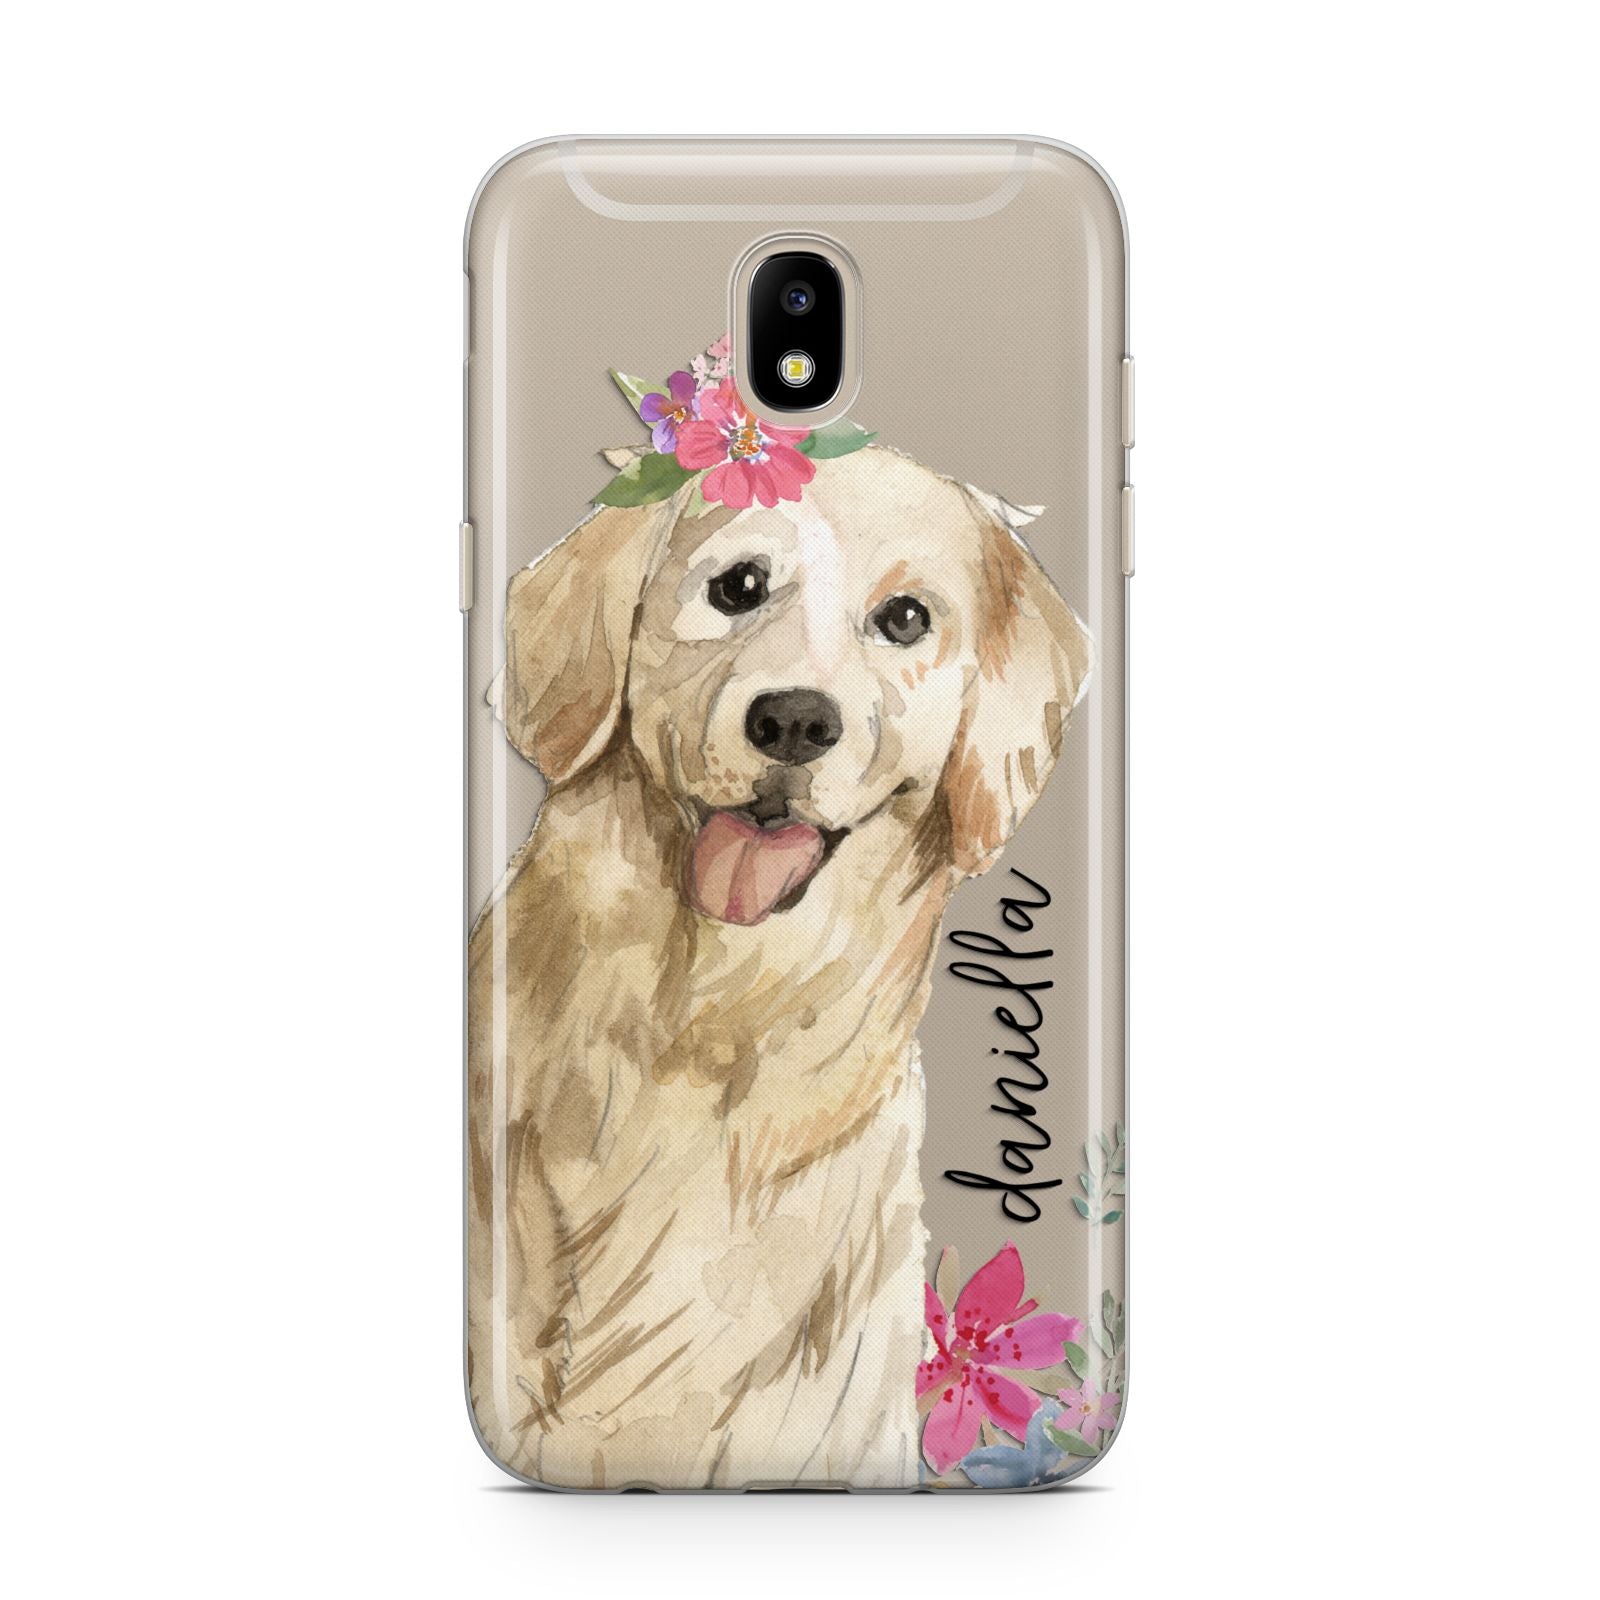 Personalised Golden Retriever Dog Samsung J5 2017 Case